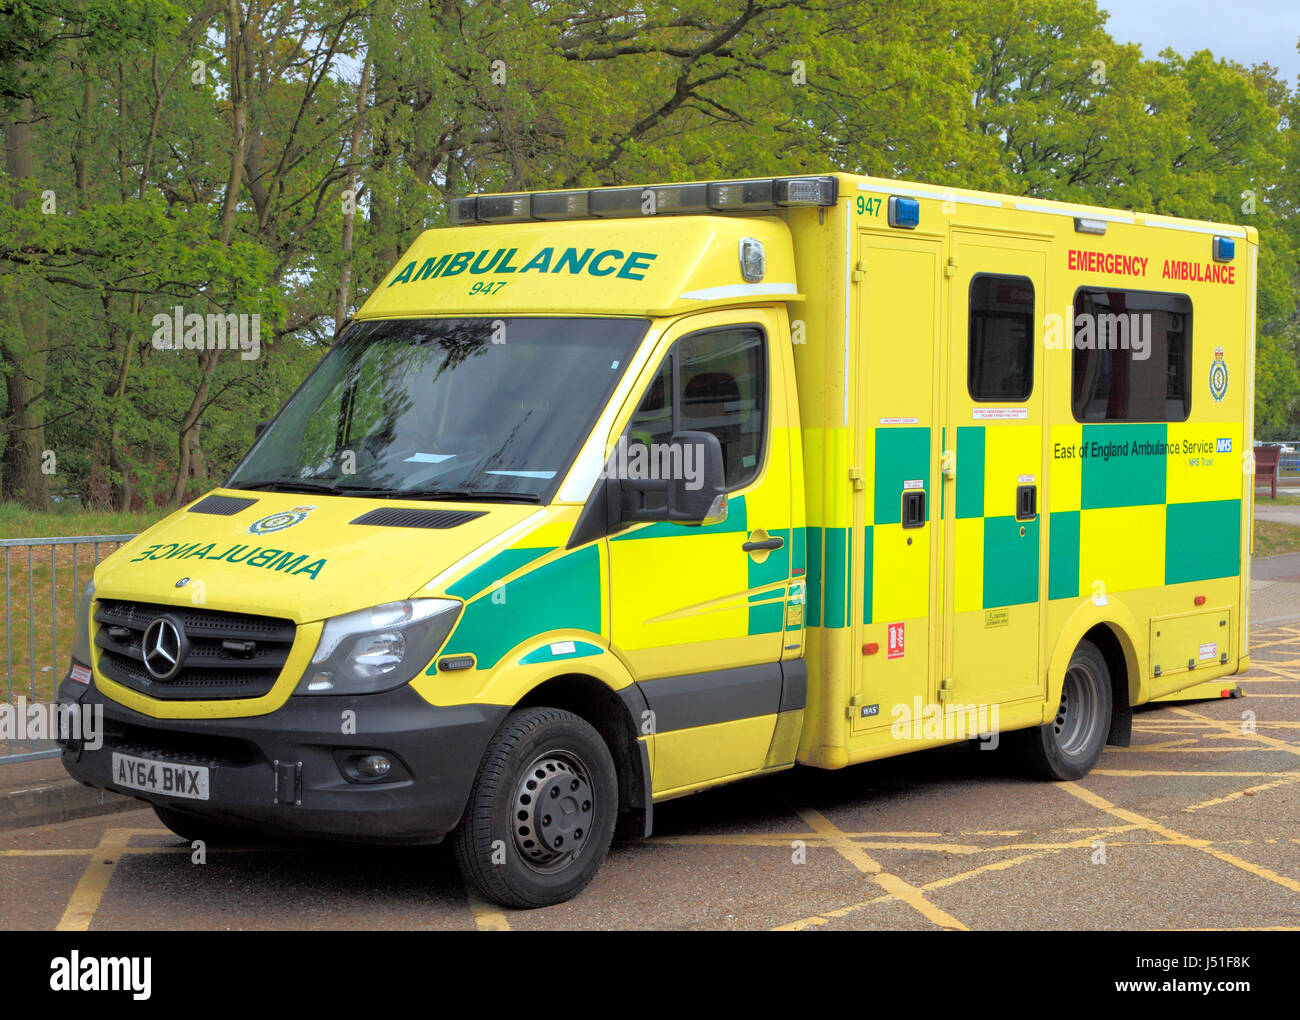 East of England Ambulance Service, Kings Lynn, Norfolk, England, UK, English NHS ambulances Stock Photo